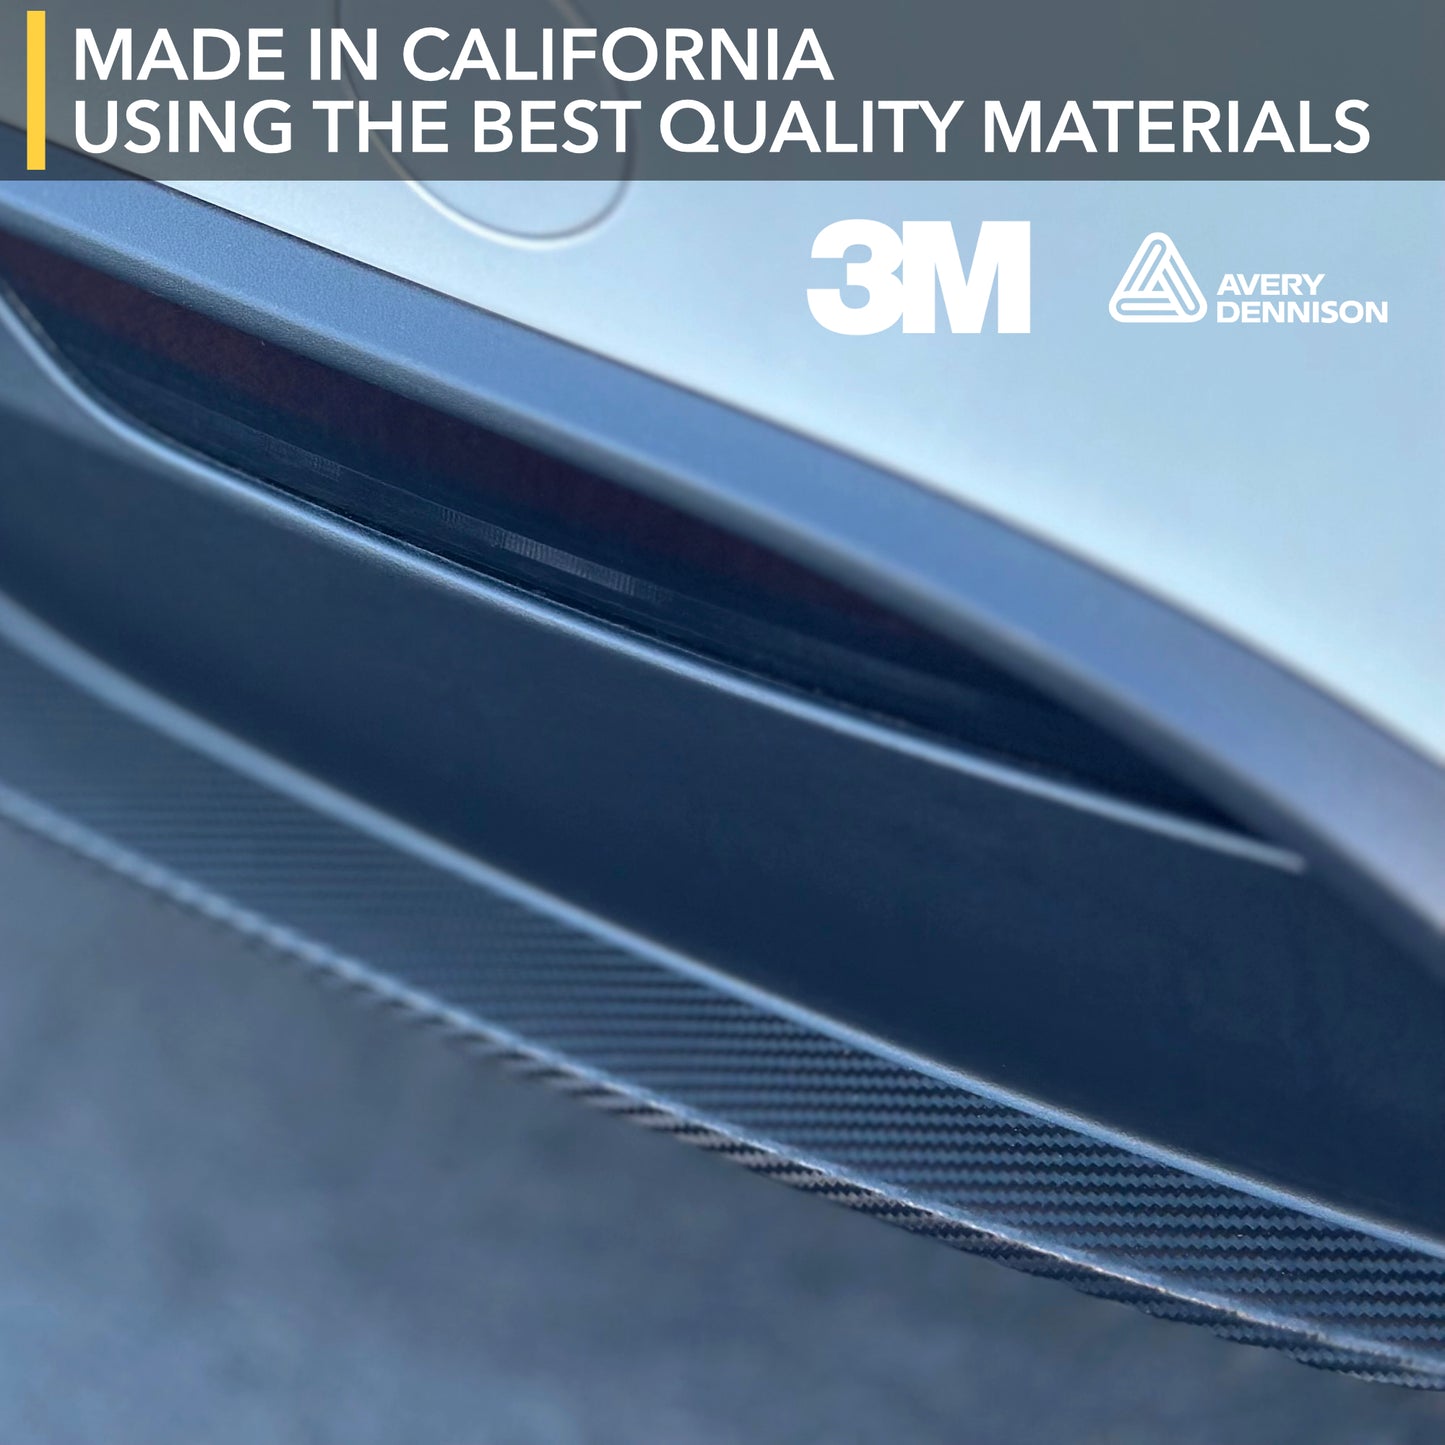 Diffuser Lip Vinyl Wrap for Tesla Model 3 Highland - Carbon Fiber Film Cover